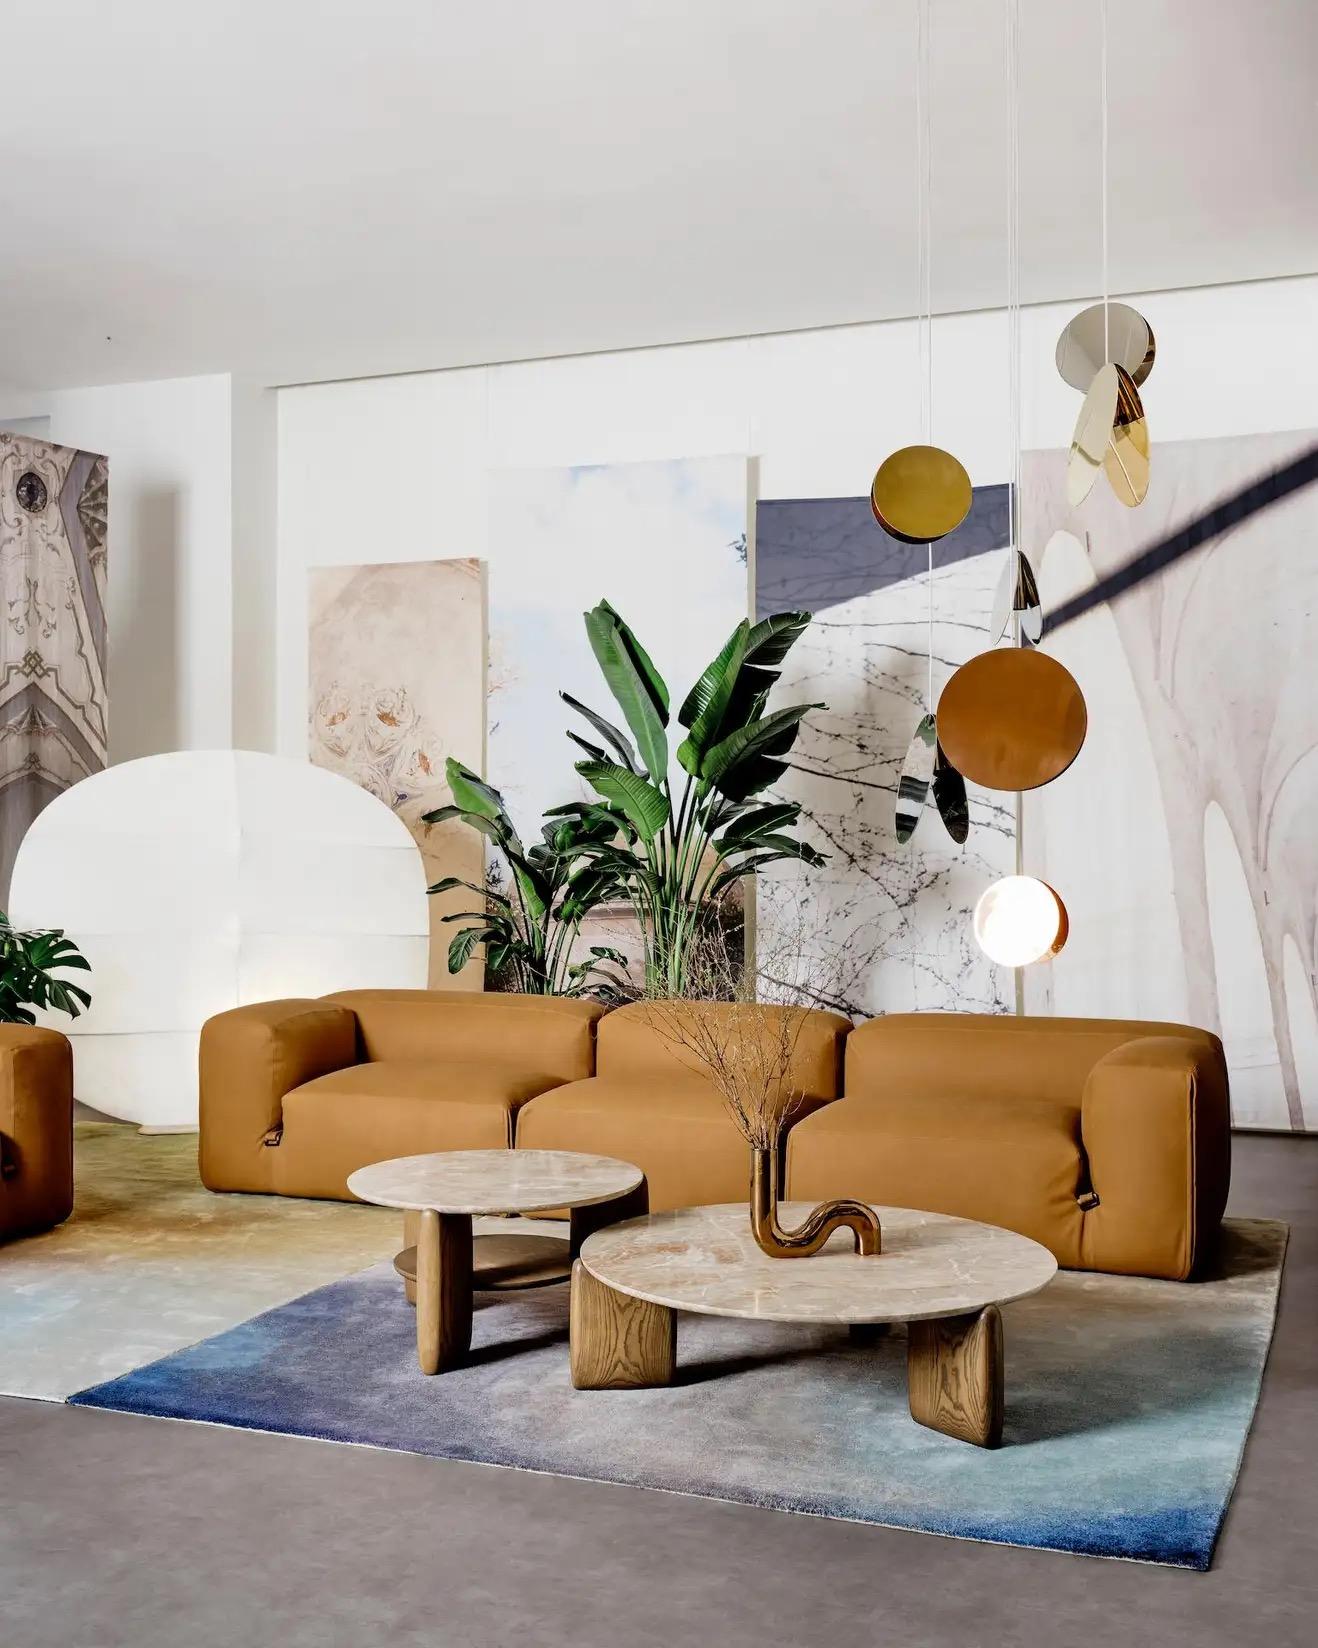  Tacchini Le Mura Leather  sofa & lounge chair by Mario Bellini in STOCK 3